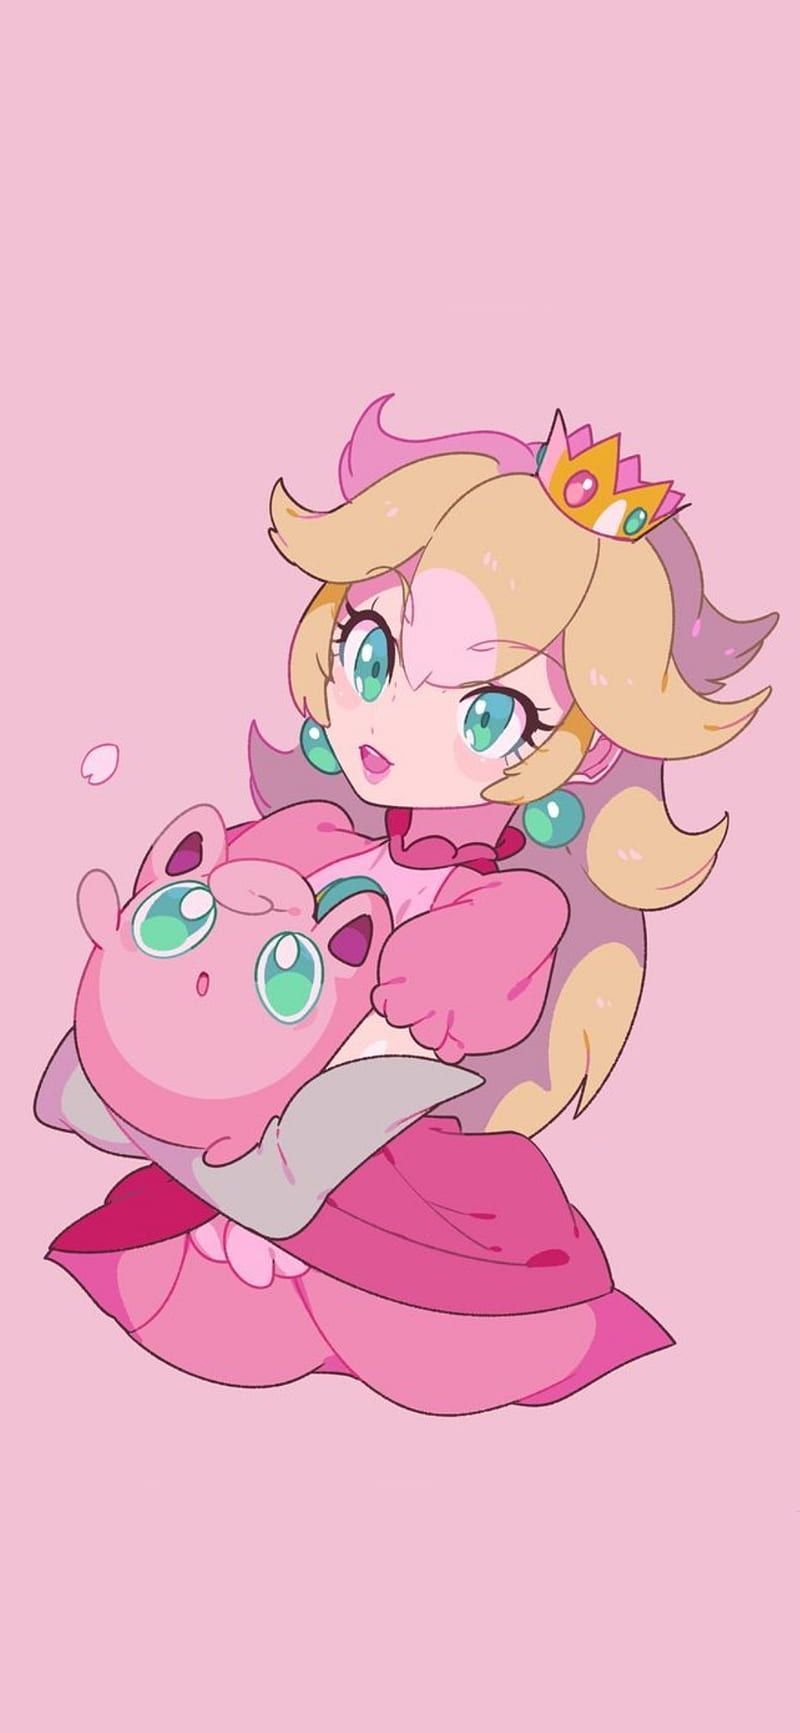 Princess Peach holding a pink shell - Princess Peach